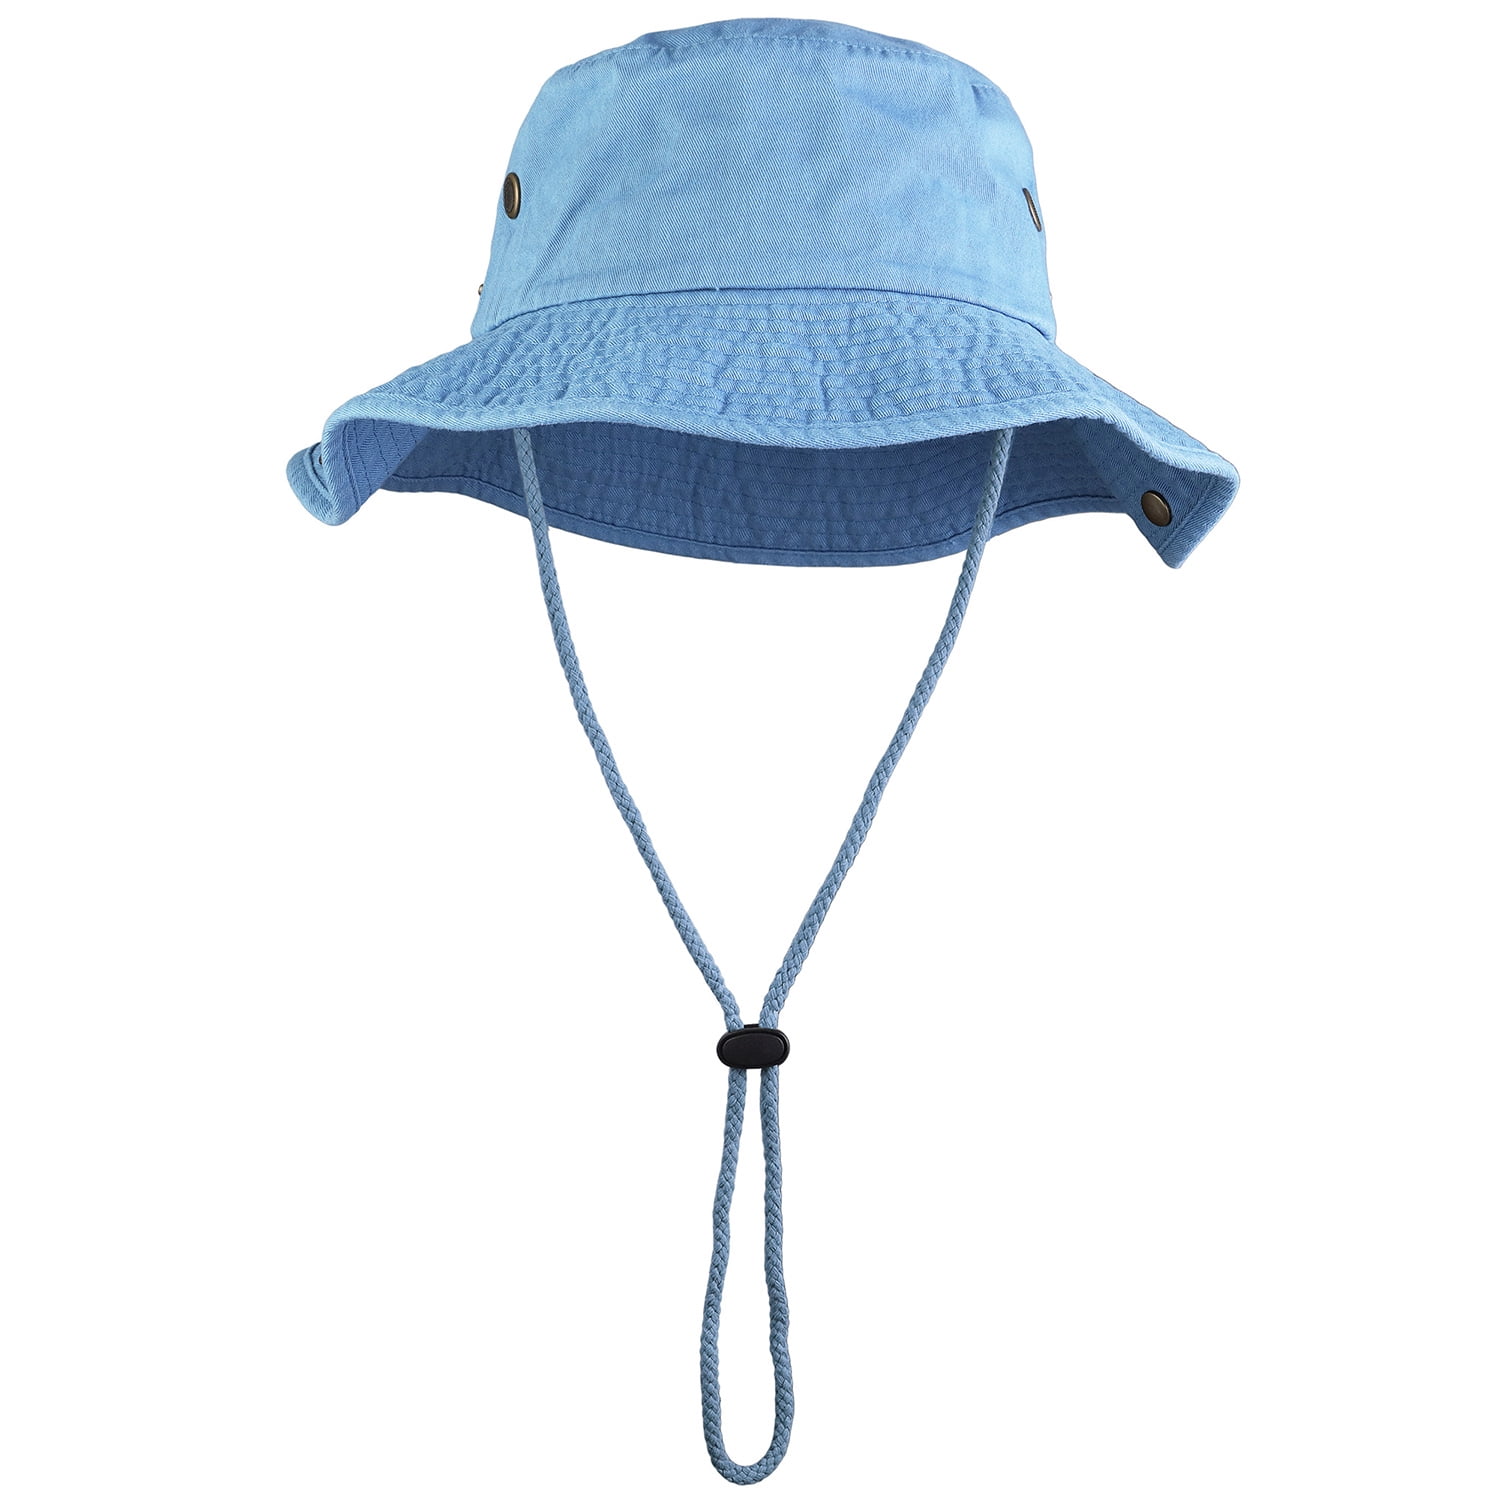  Connectyle Unisex Kids Fishing Sun Hat Boys Adjustable Wide  Brim Hat Hiking Safari Hats M Aqua Blue: Clothing, Shoes & Jewelry